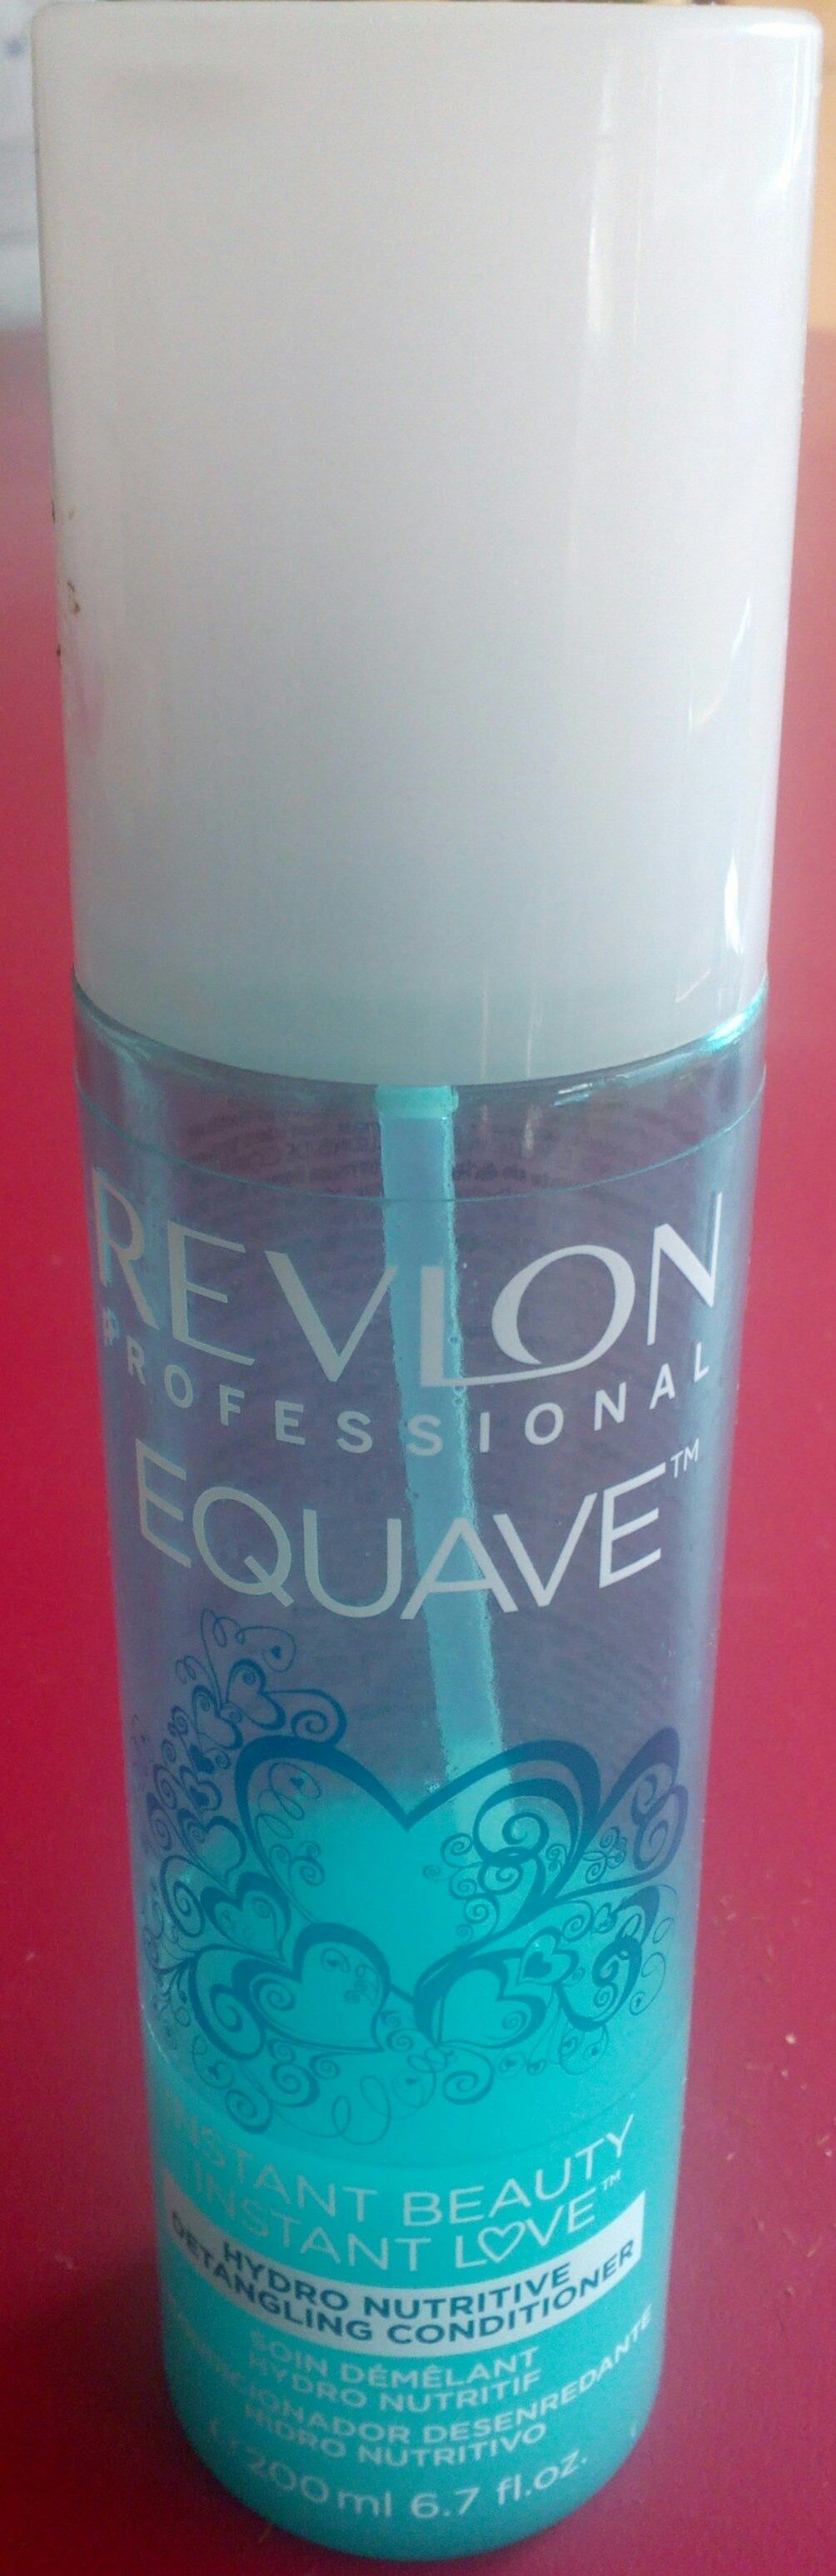 Revlon professional equave Hydro nutritive detangling conditioner soin démêlant hydro nutritif - Produkt - en